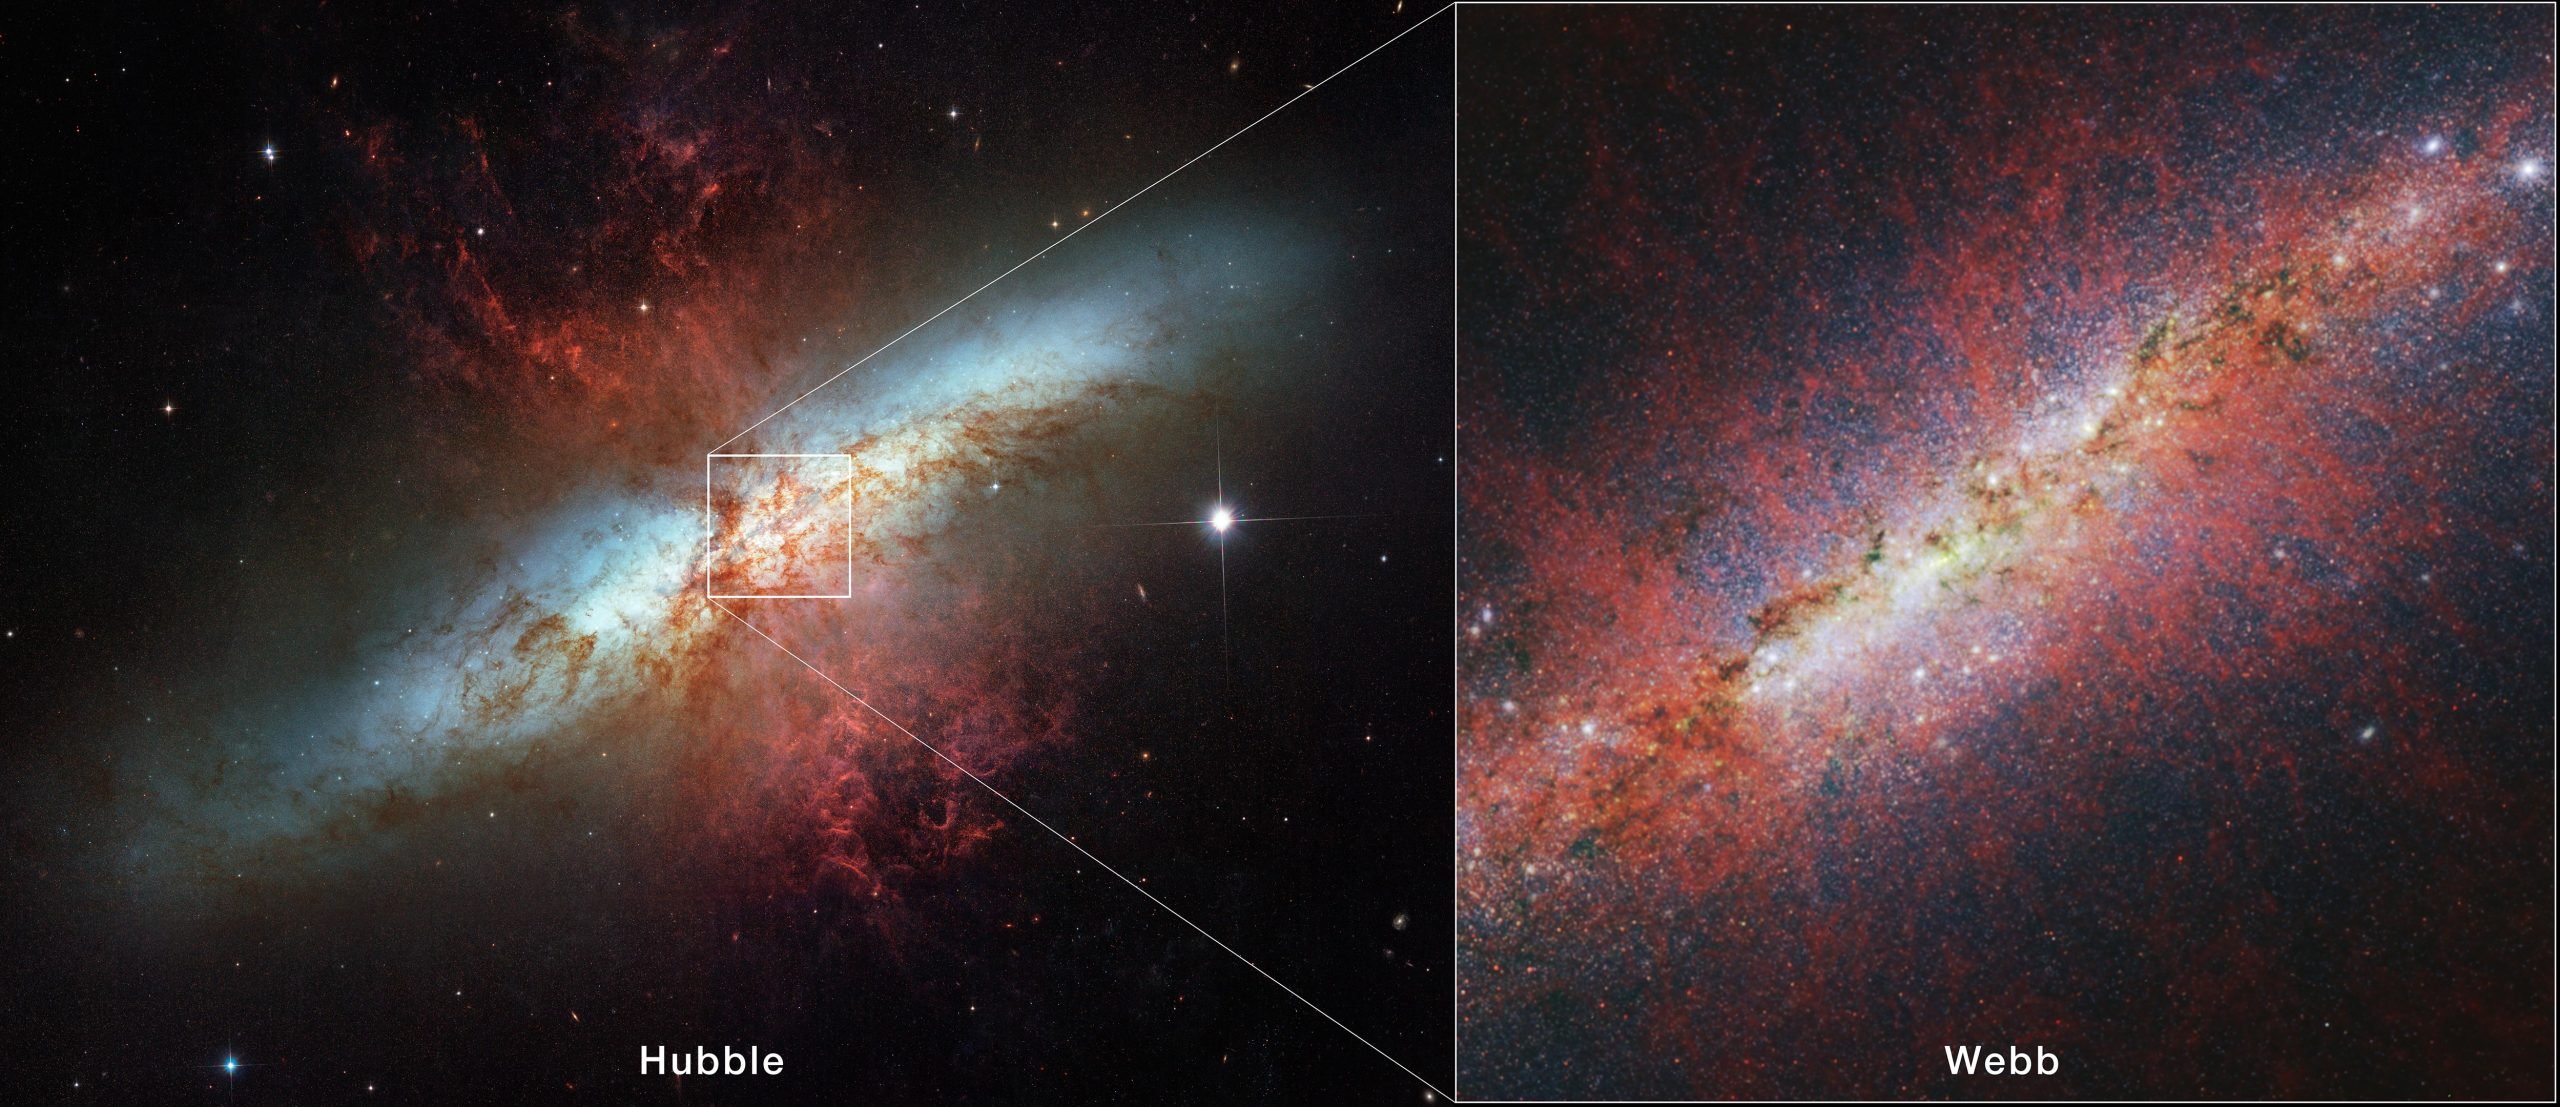 Webb Space Telescope Reveals Extreme Starburst Galaxys Hidden Secrets [Video]